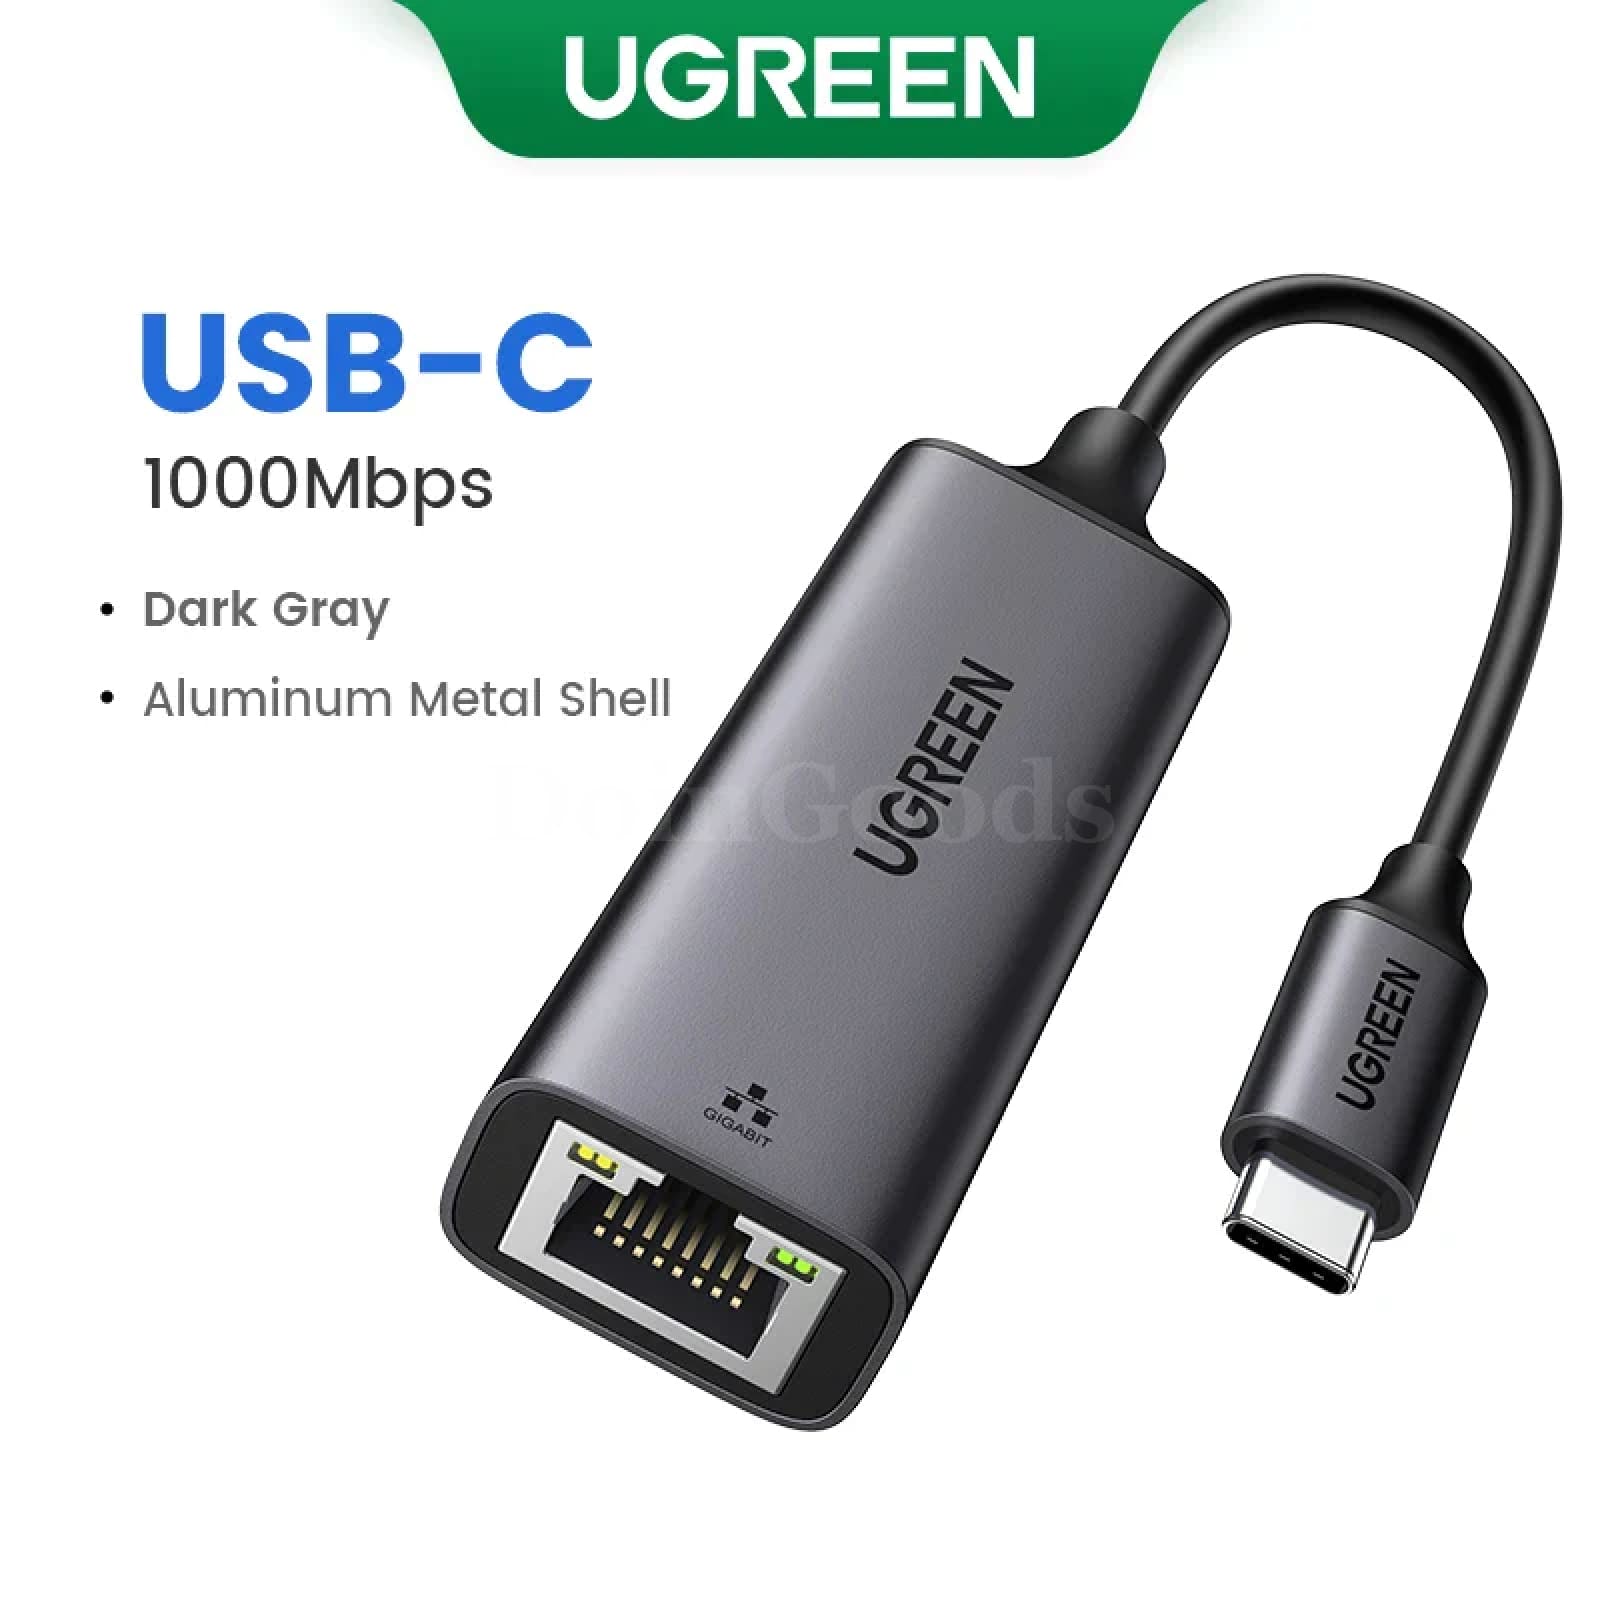 Ugreen Usb 3.0 Ethernet Adapter Network Card For Win 10 Pc Xiaomi Mi Box Usb-C Dark Gray 301635